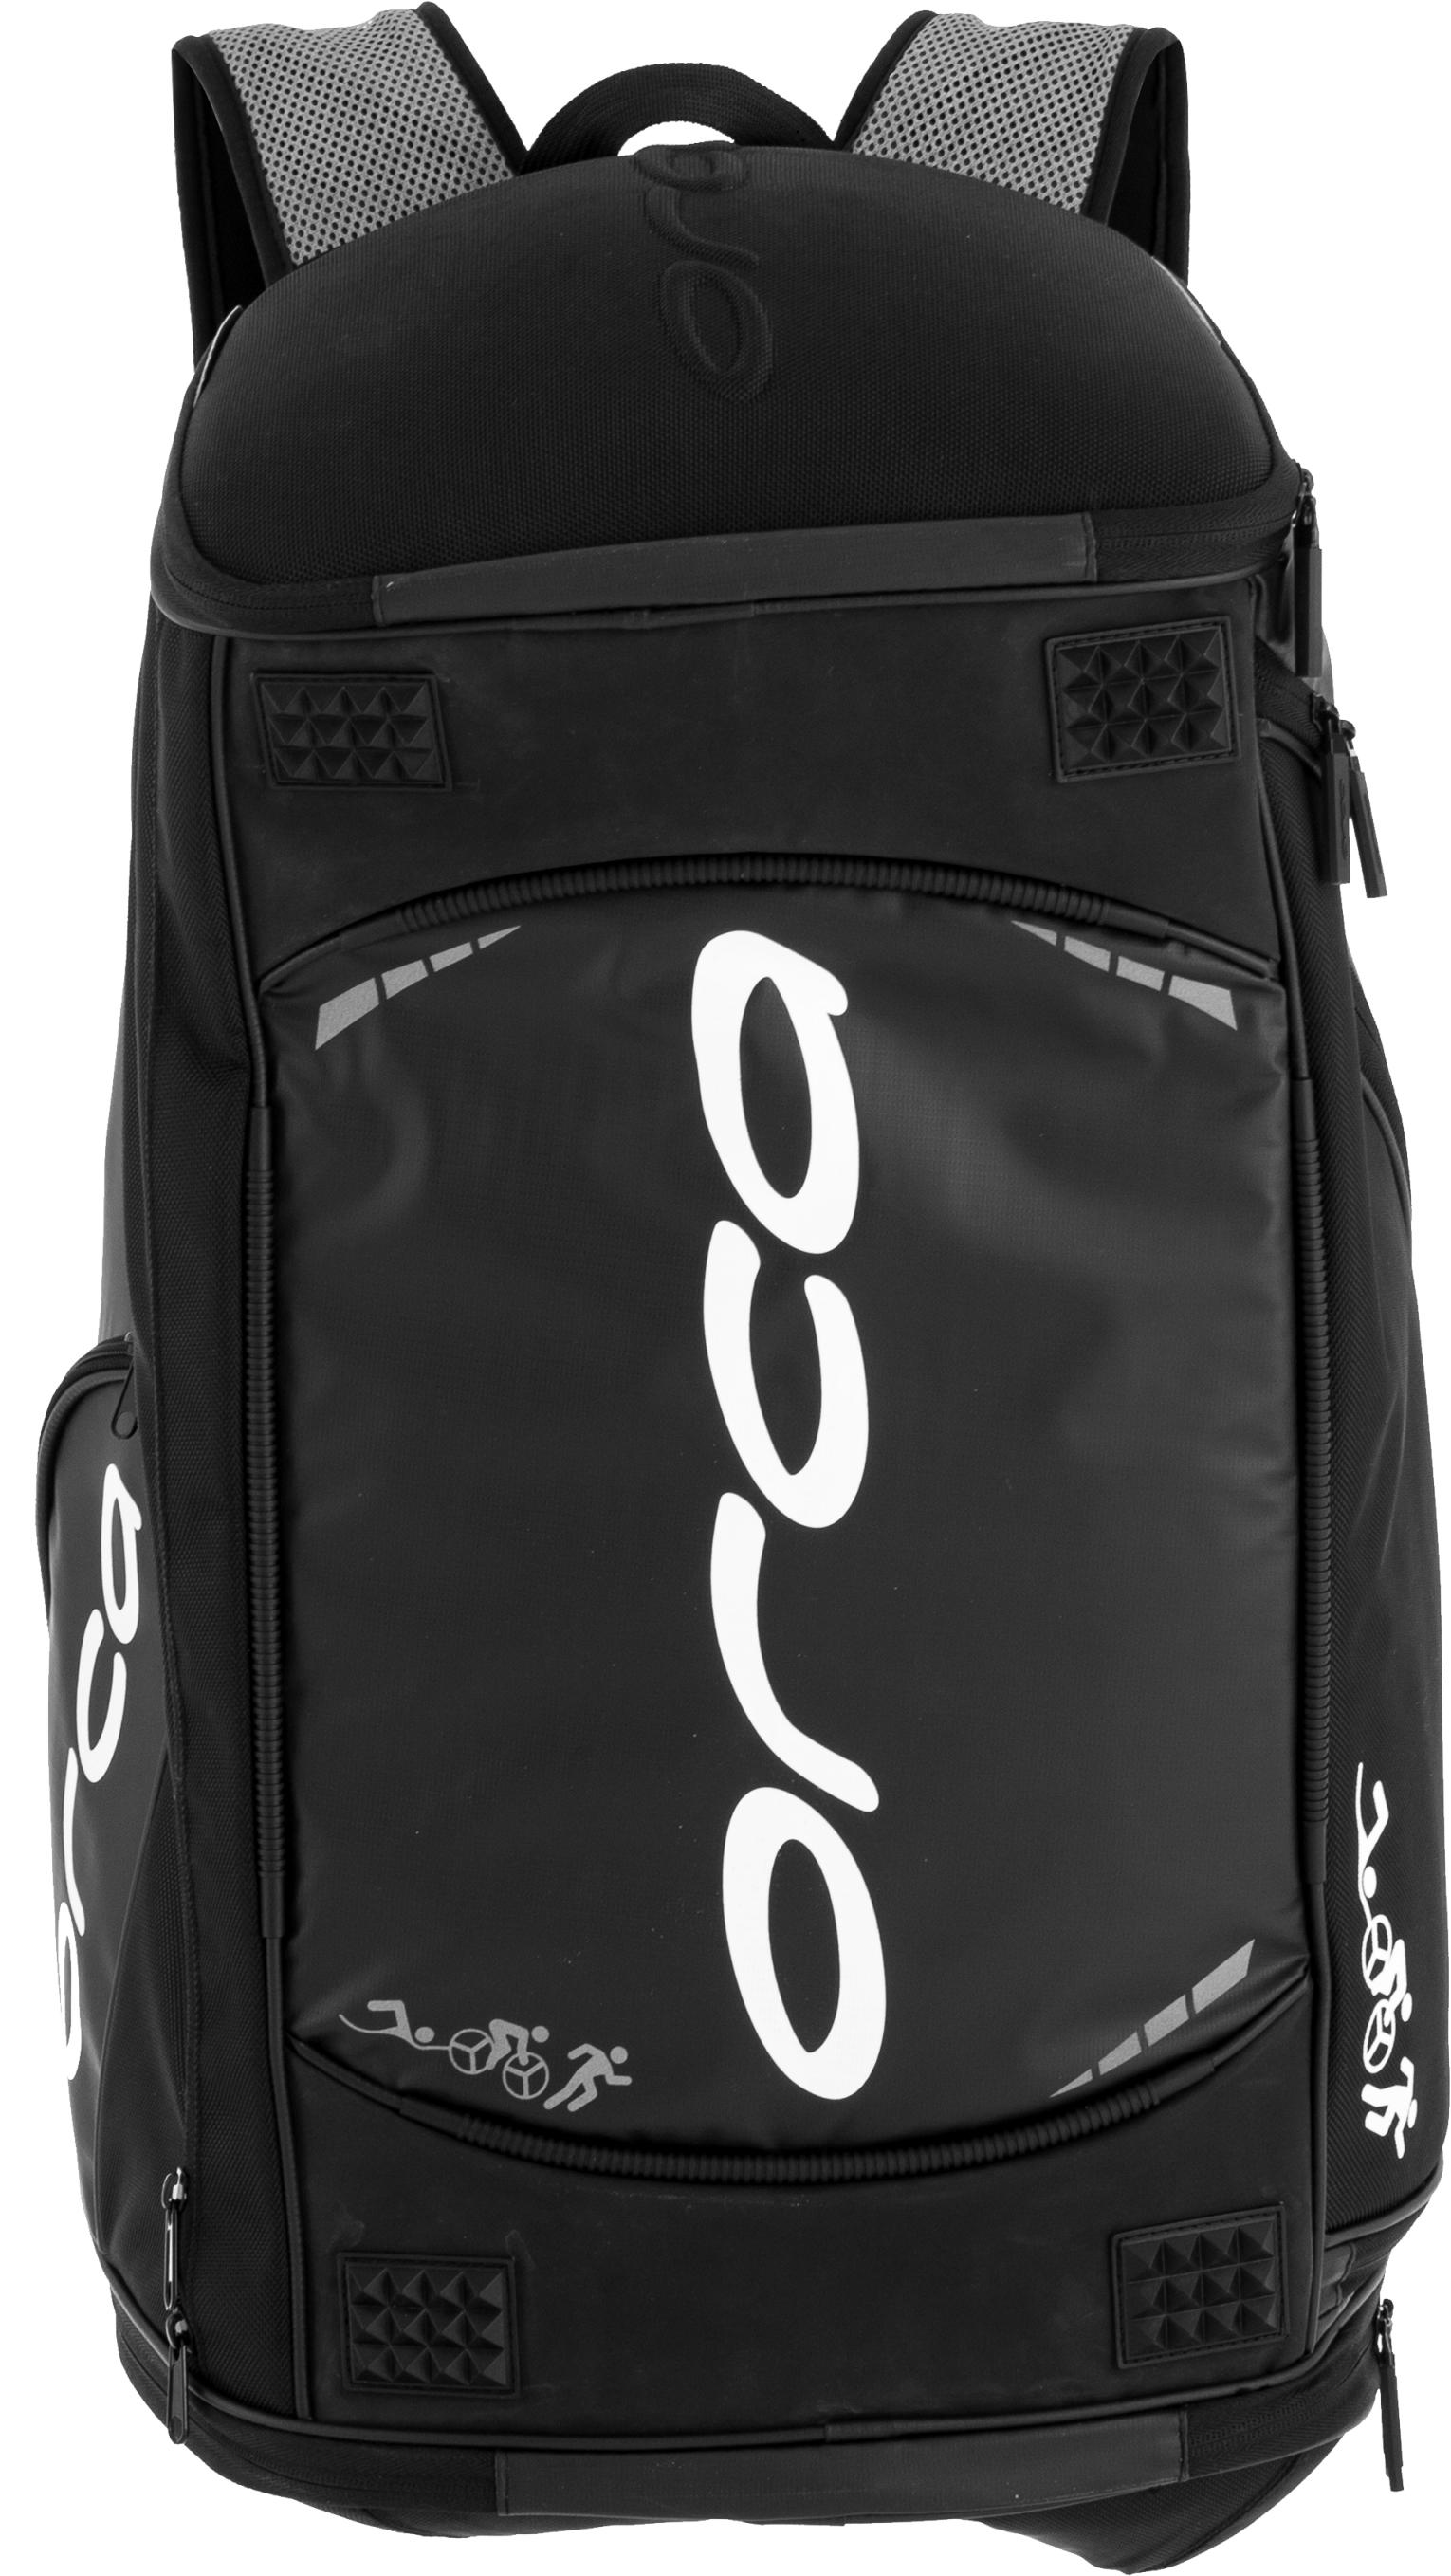 Orca Triathlon Transition Bag - Black